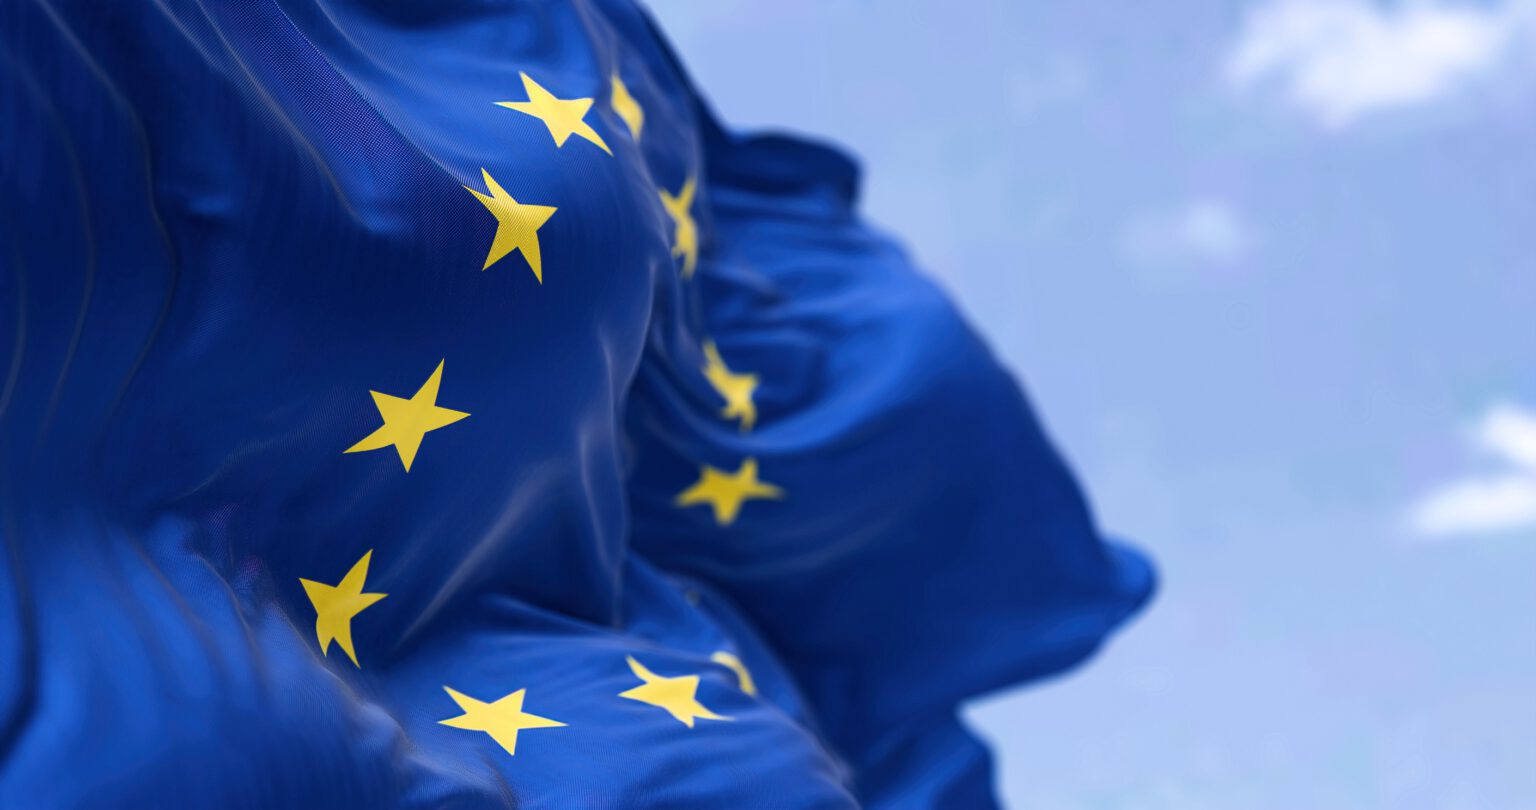 EU-flag-1536x810.jpg